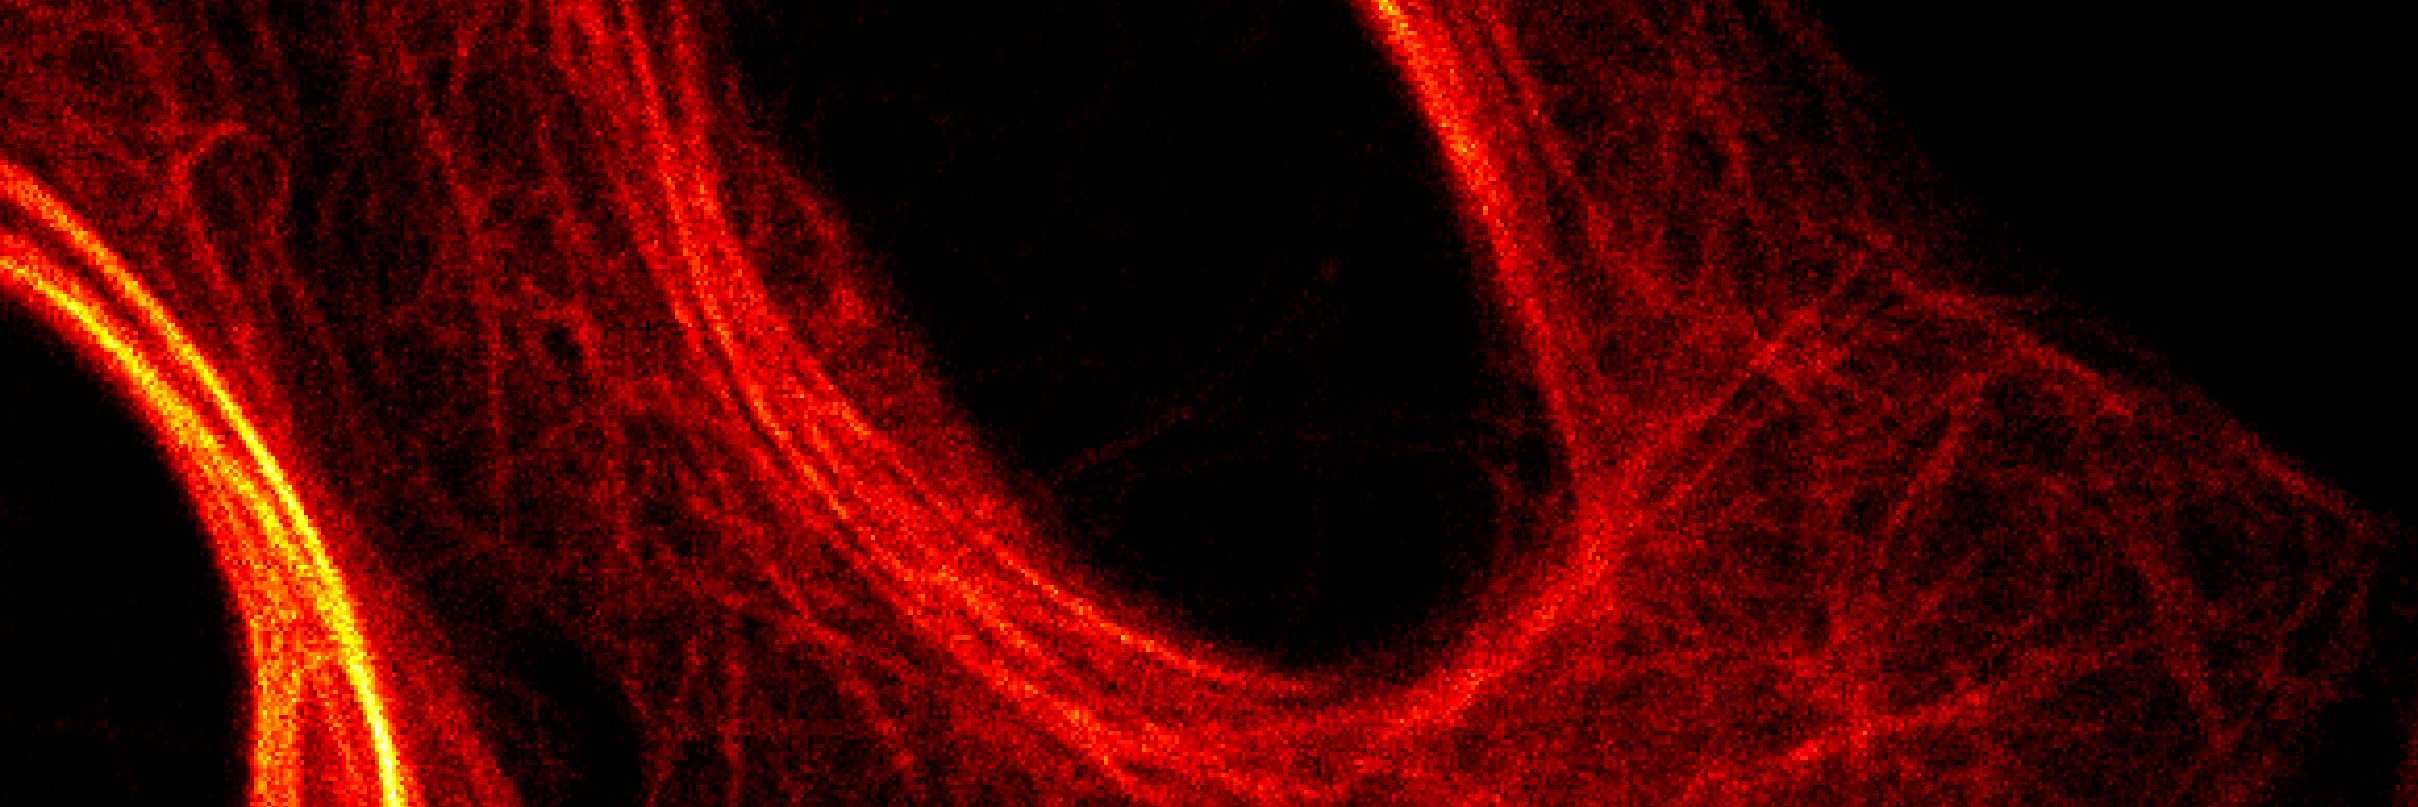 microscopy image of microtubule network 